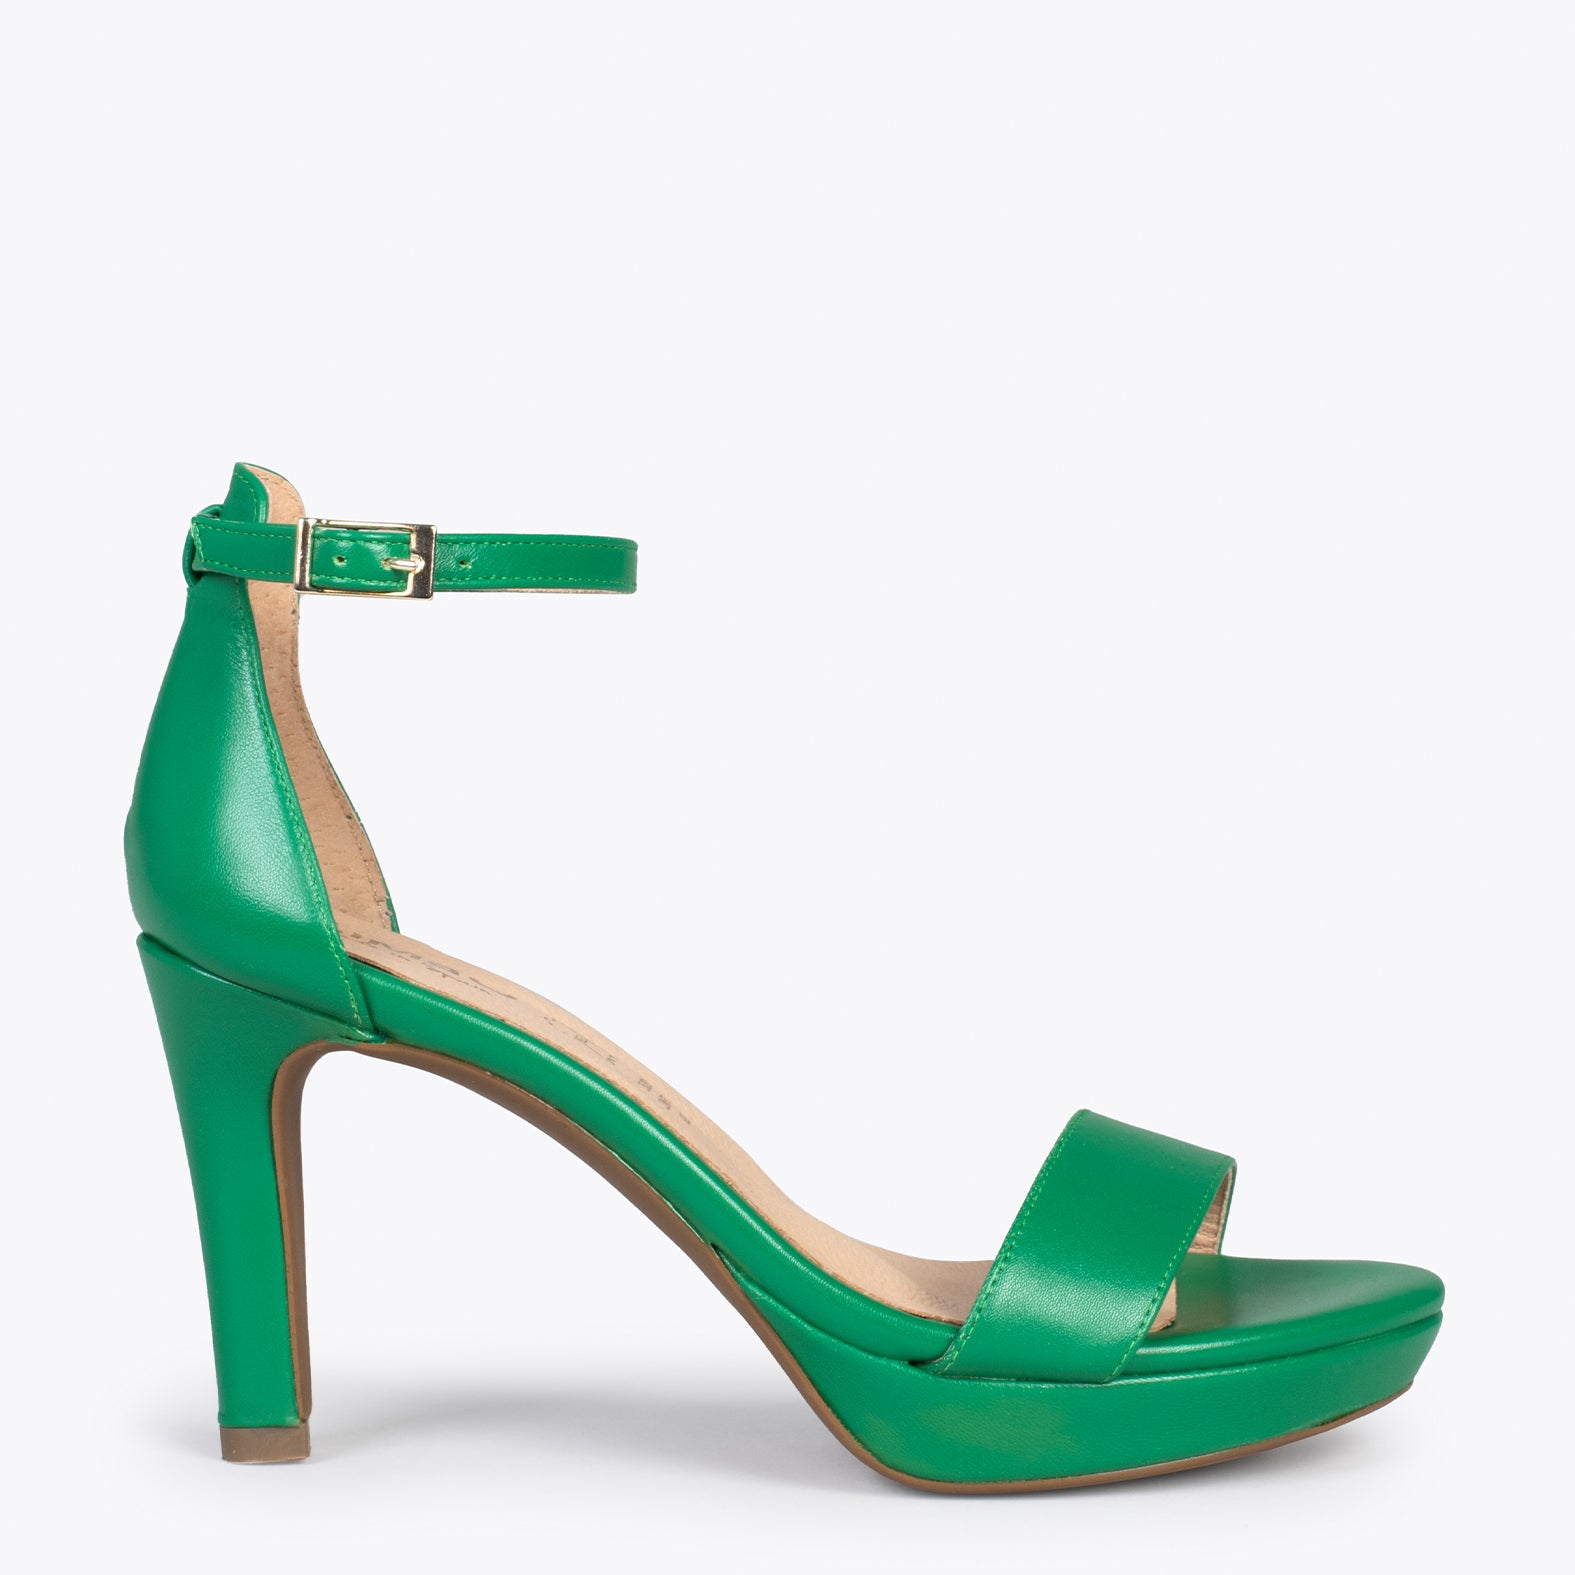 PARTY – GREEN high heel sandals with platform